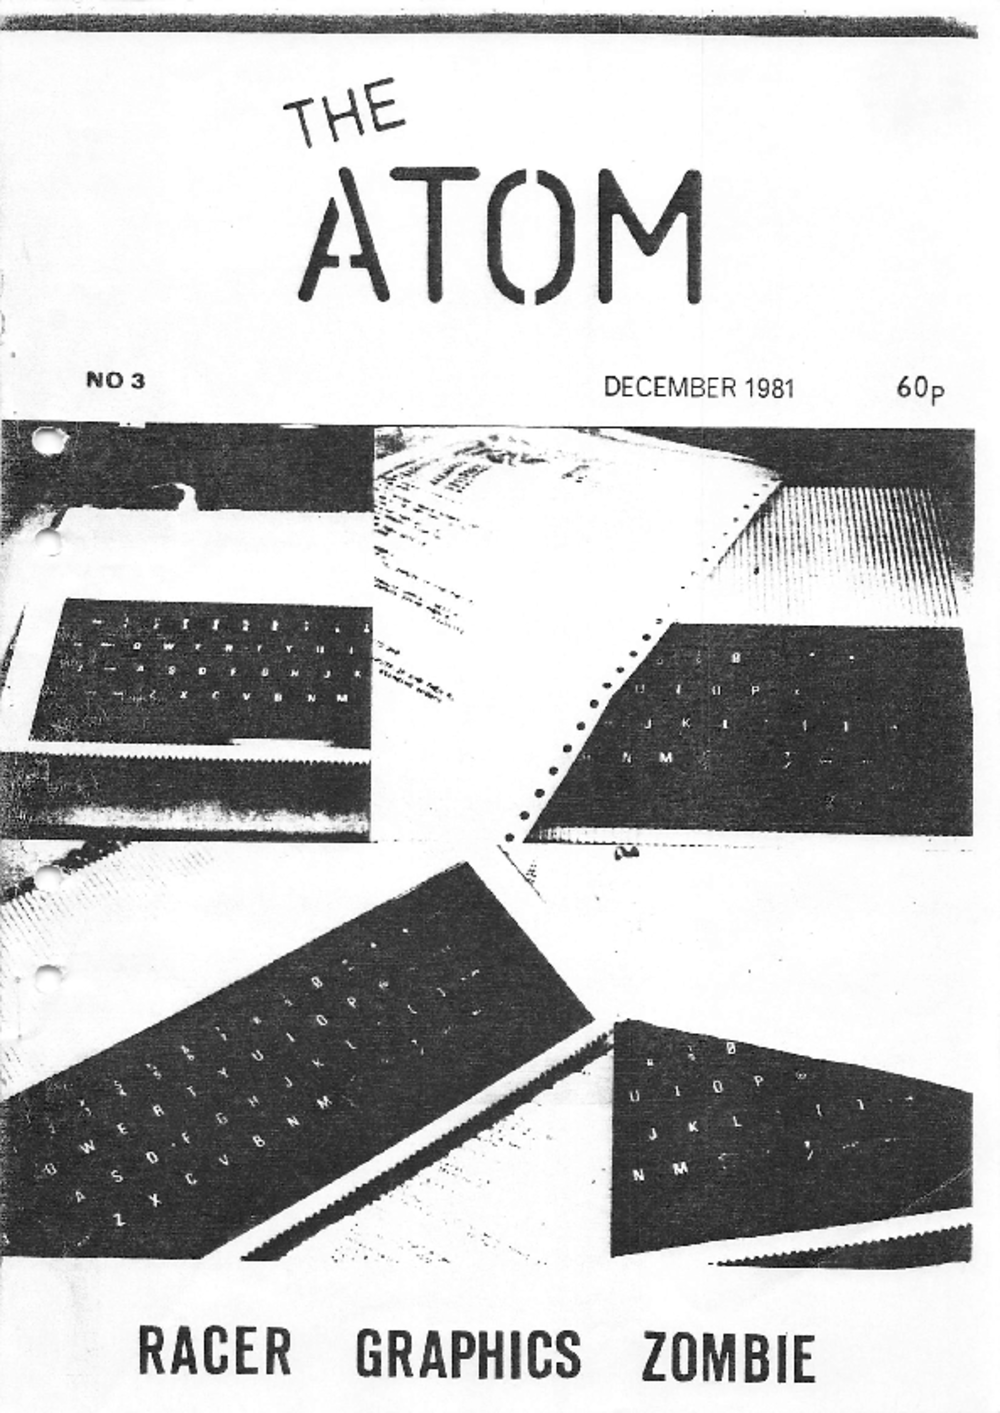 Article: The Atom - December 1981 - No 3